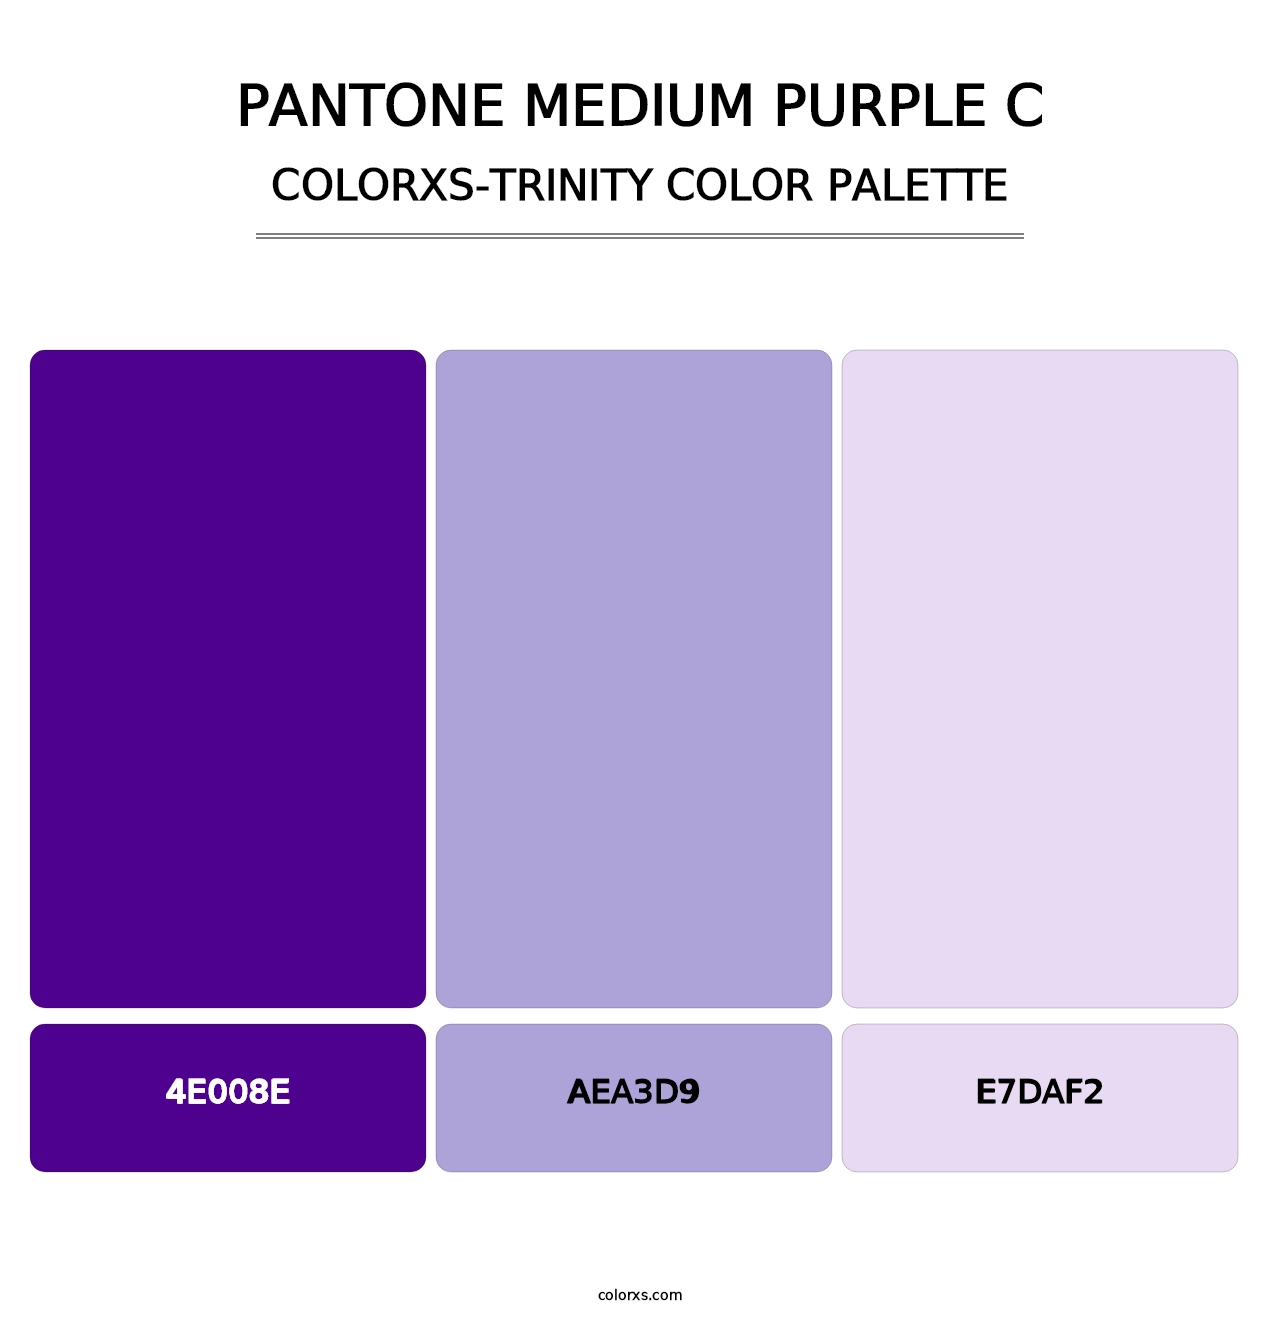 PANTONE Medium Purple C - Colorxs Trinity Palette